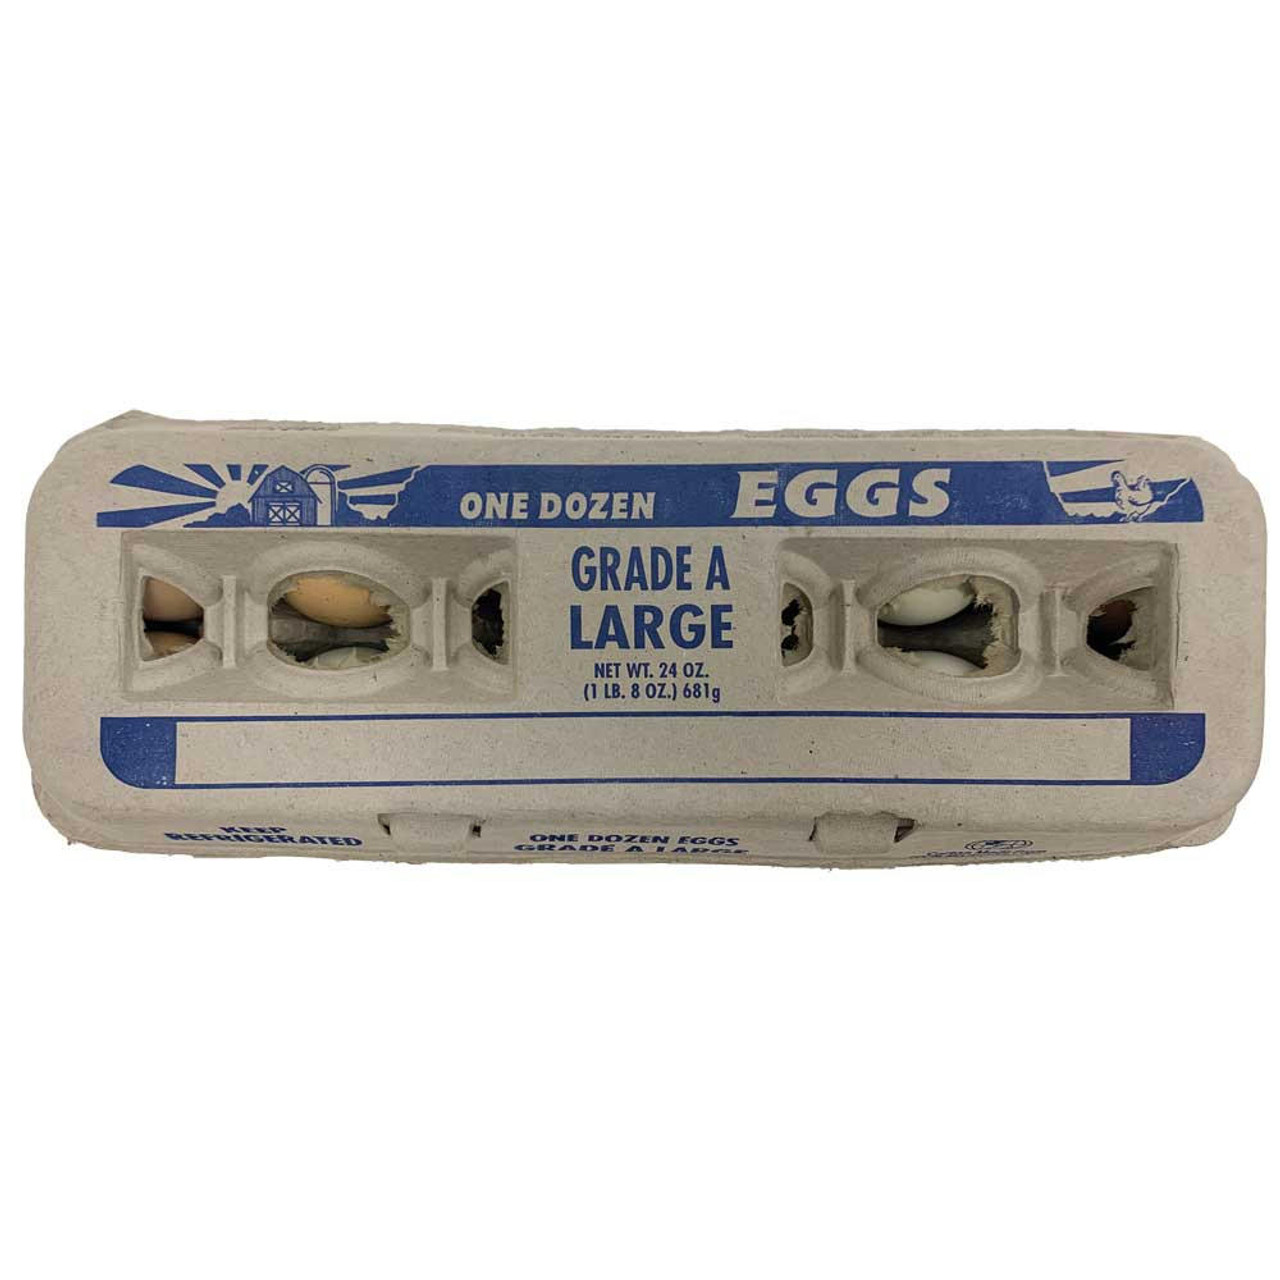 Grade A Large Printed Egg Cartons